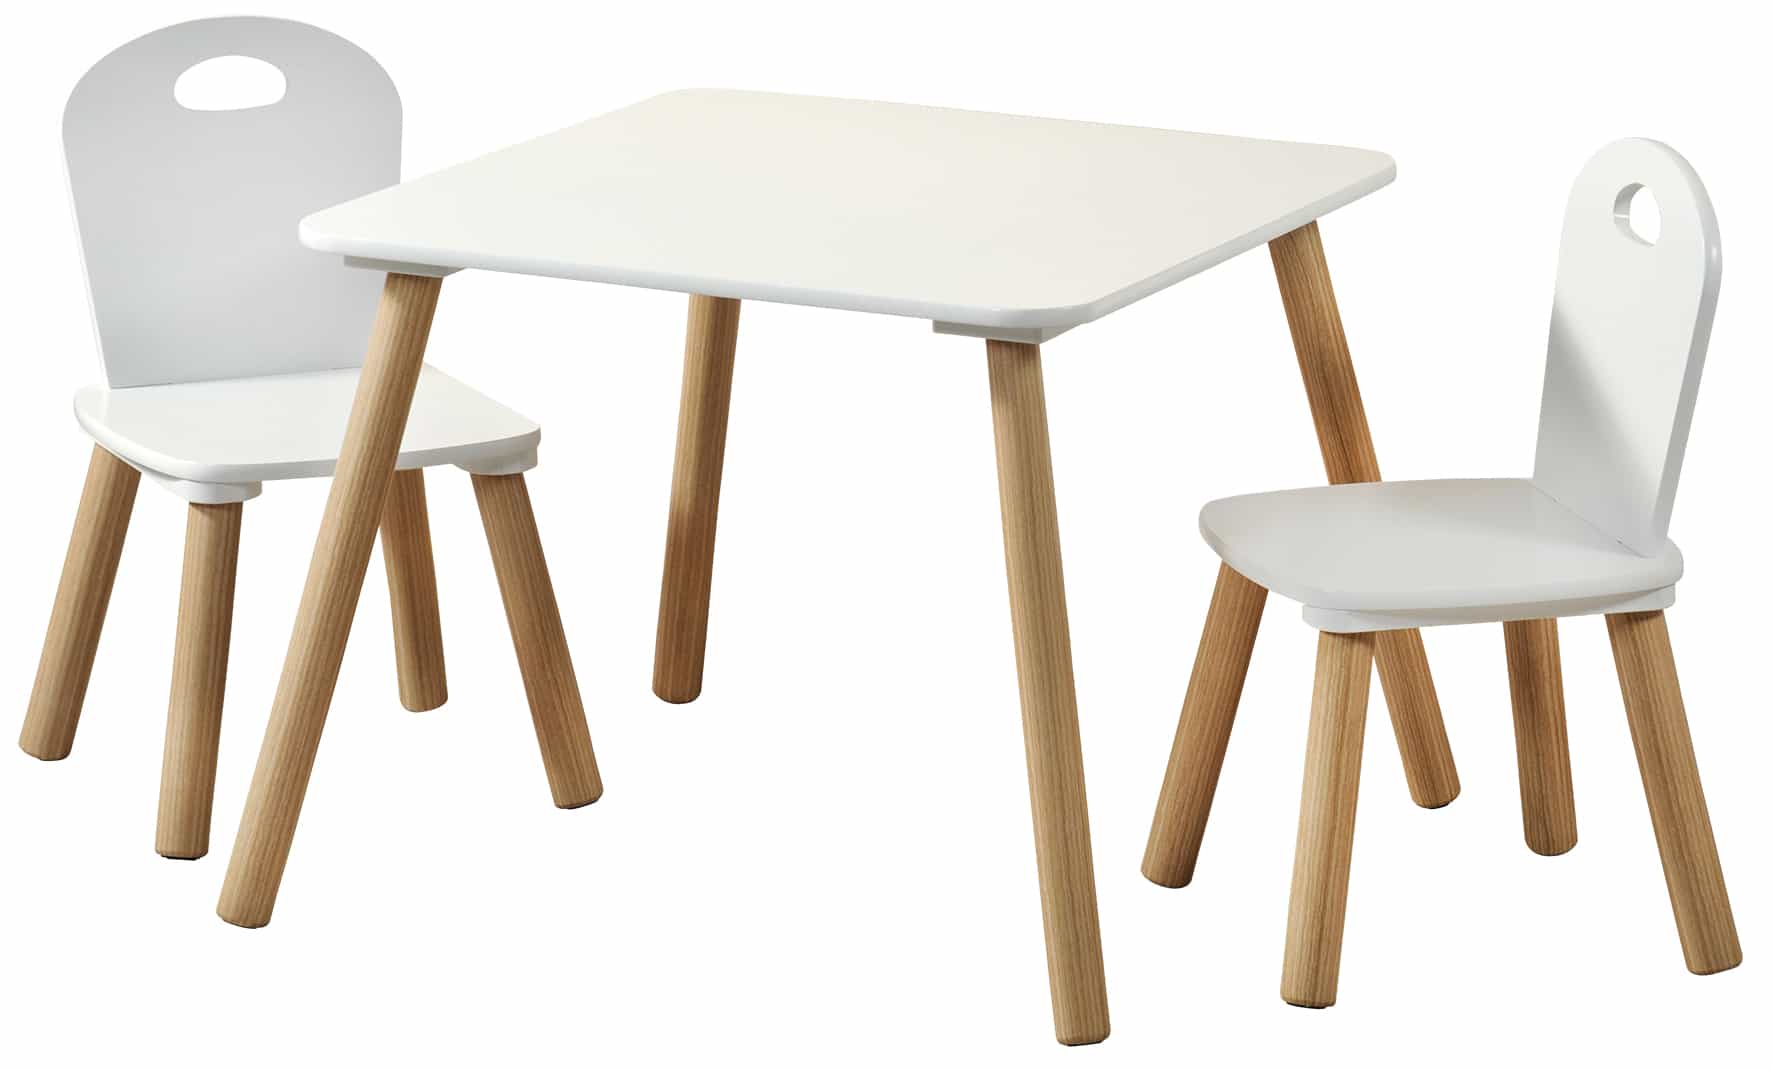 Stevige kindertafel set met stoeltjes - 55x55x45 cm